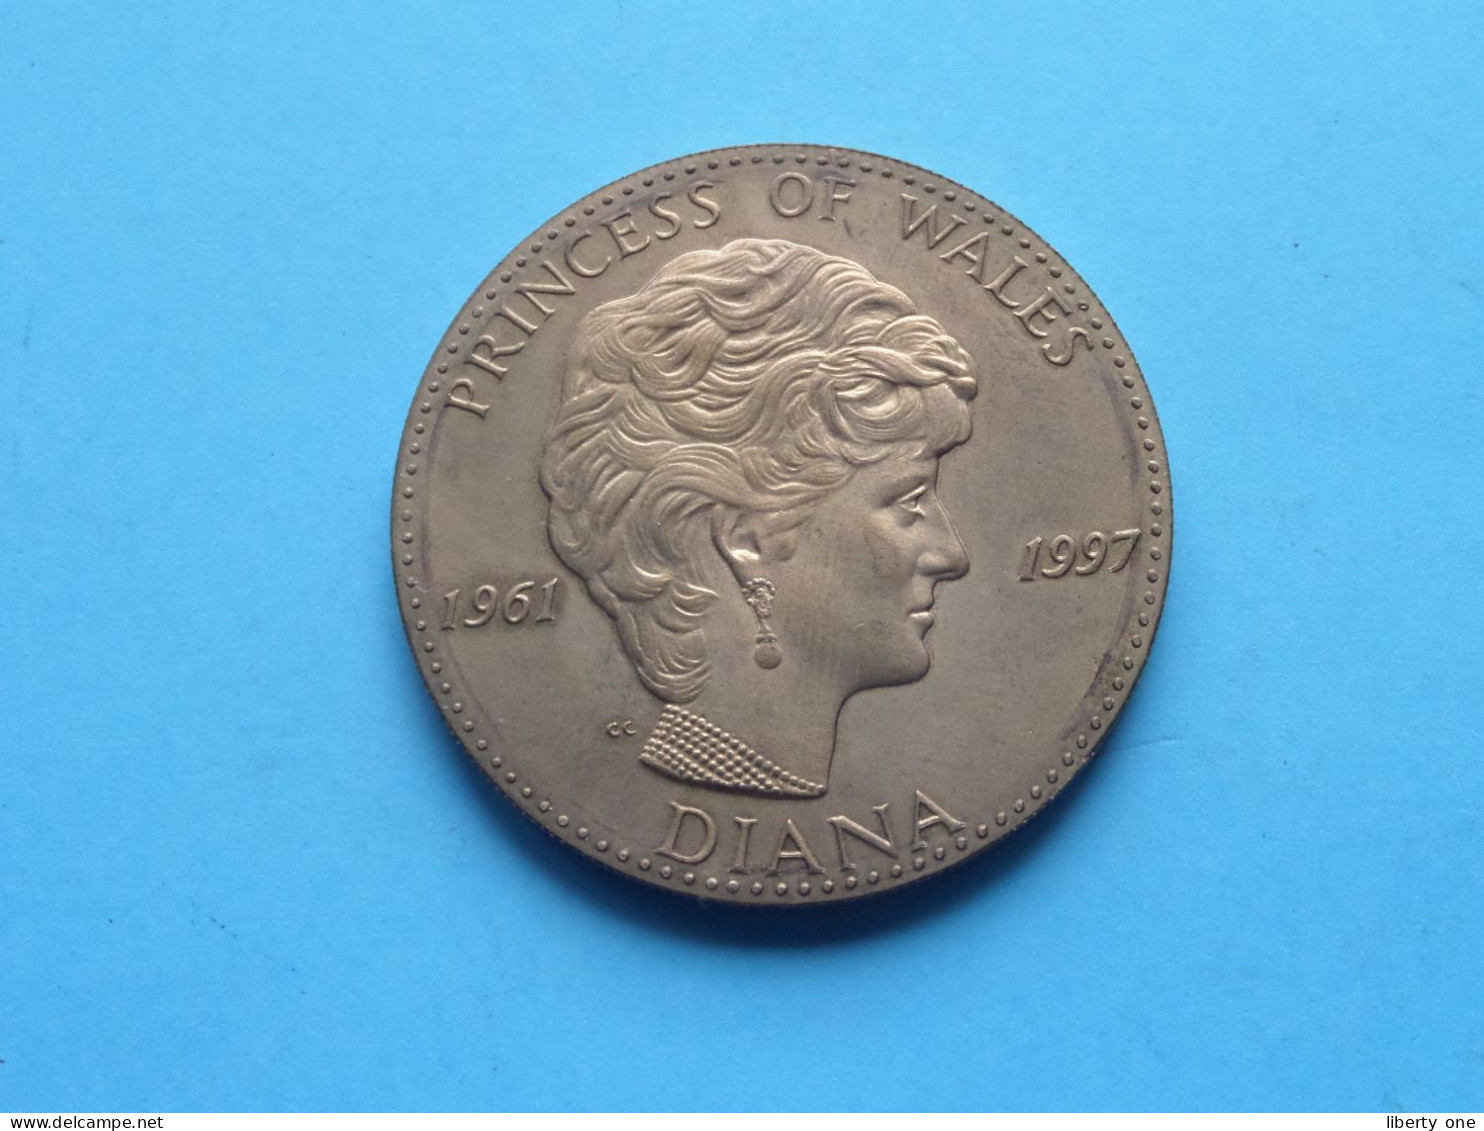 LADY DI - Diana Princess Of Wales 1997 ( See SCANS ) 33 Gr. / 41 Mm. ( Bronze ) 1961-1997 DIANA ( Belgium Coin ) ! - Pièces écrasées (Elongated Coins)